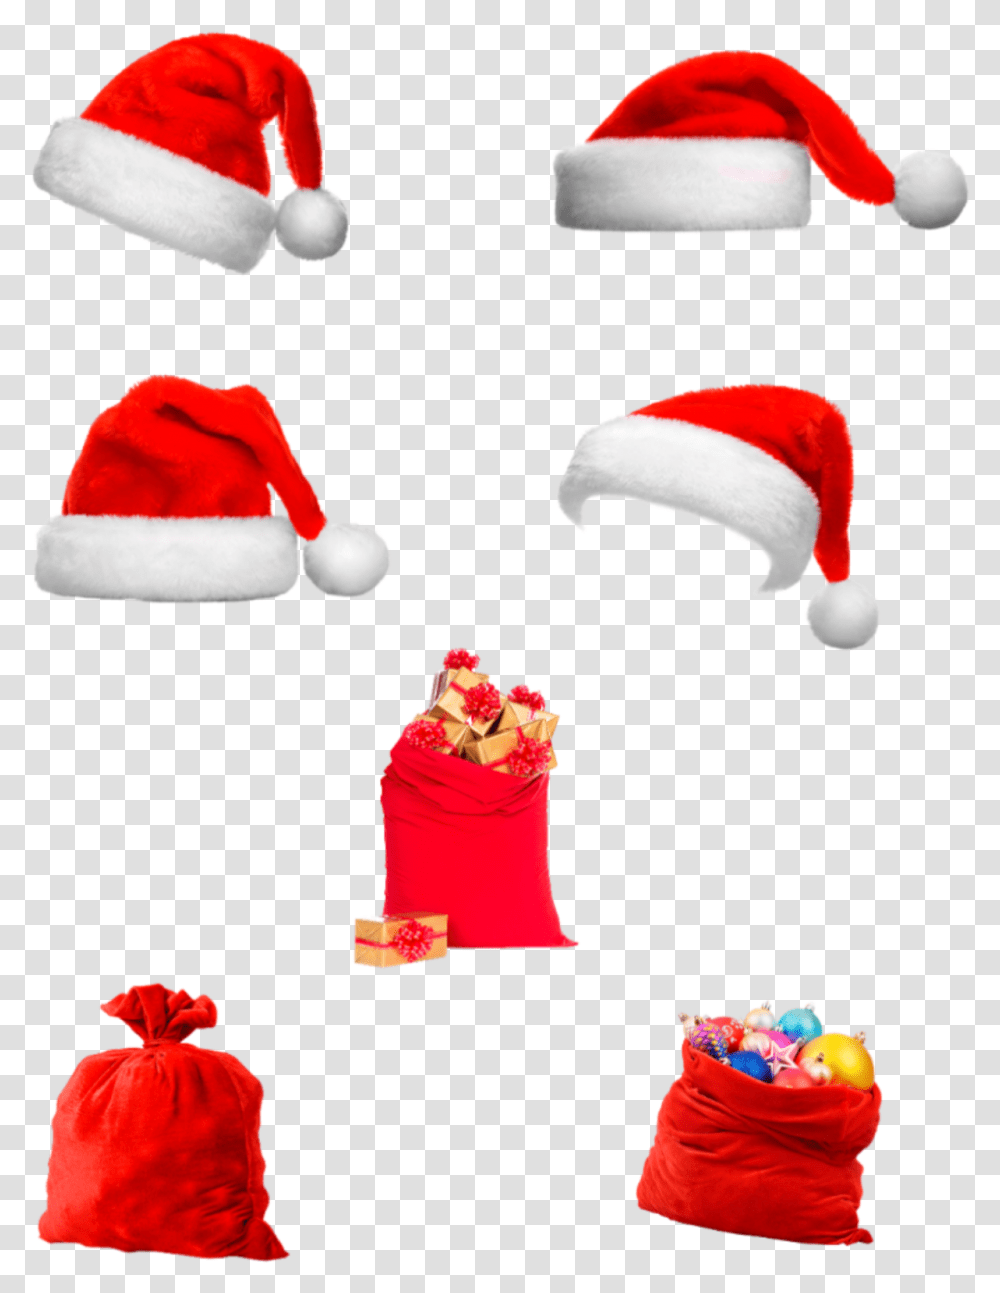 Santa Hat Santahat Bags Present Holiday Christmas Santa Claus, Apparel, Dessert, Food Transparent Png